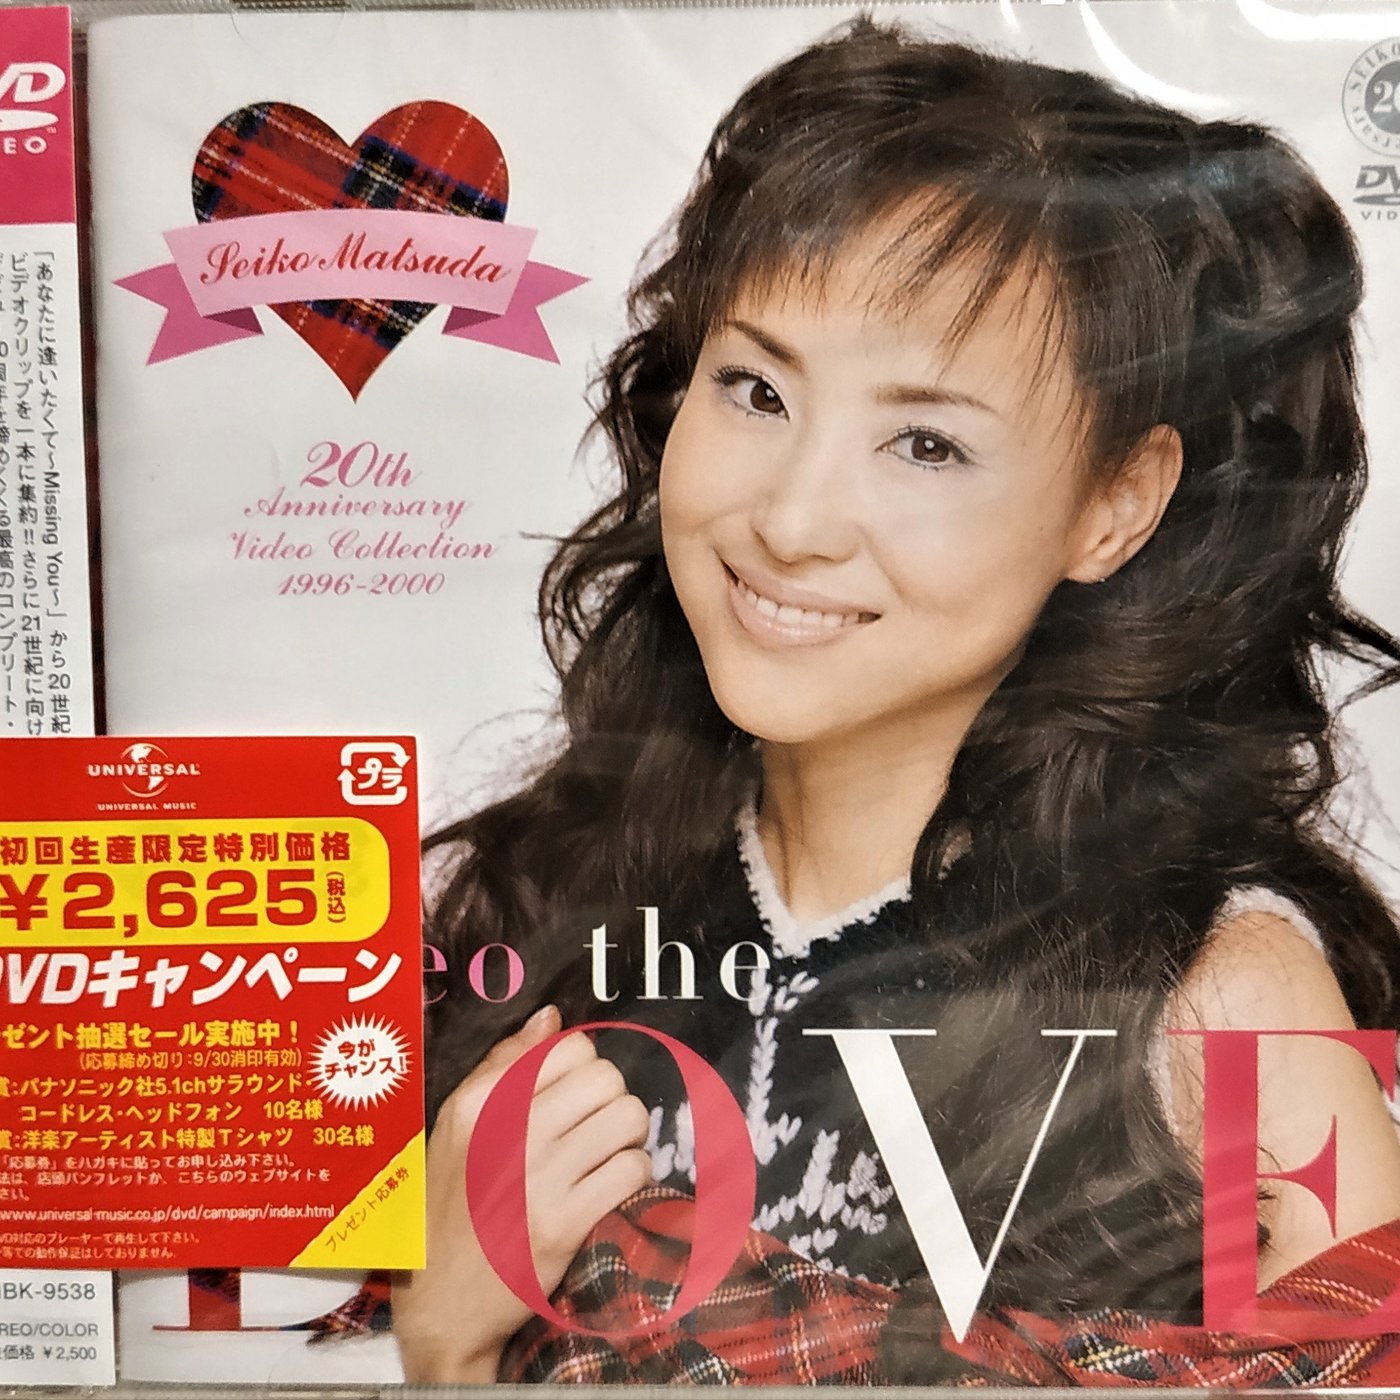 松田聖子~ Video the LOVE ～Seiko Matsuda 20th Anniversary DVD 